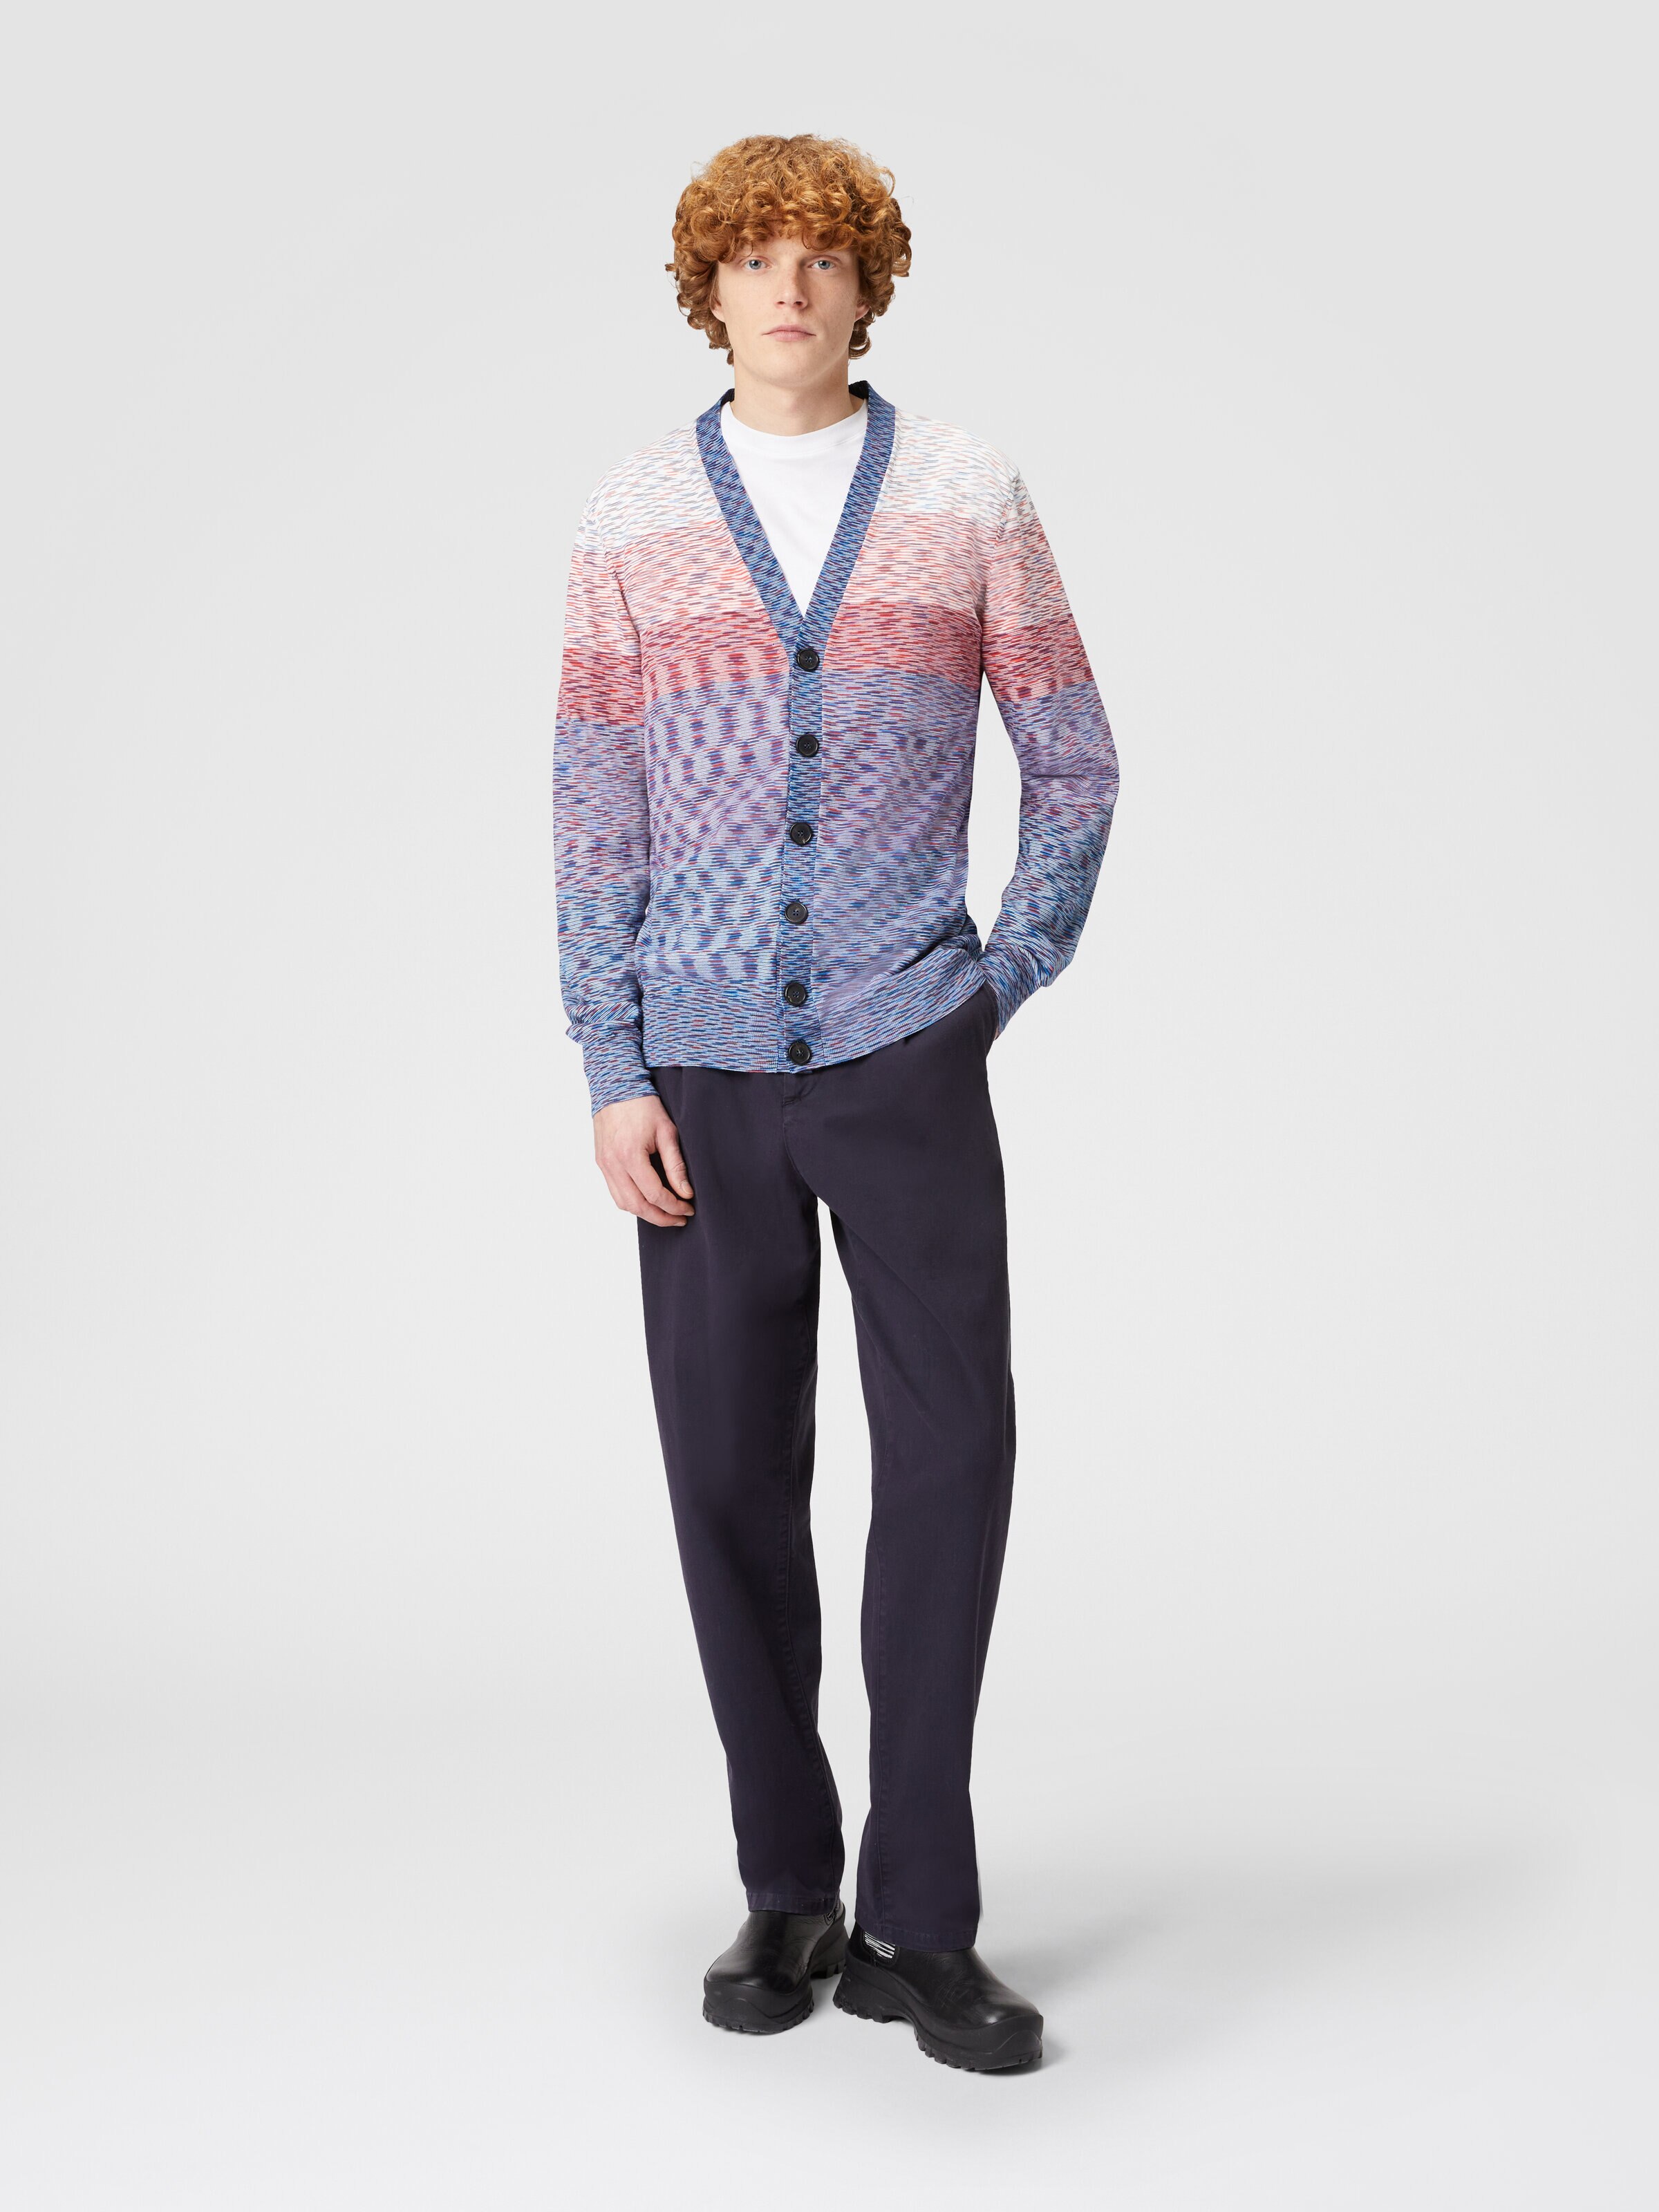 Cardigan in dégradé slub cotton knit, Multicoloured  - 1